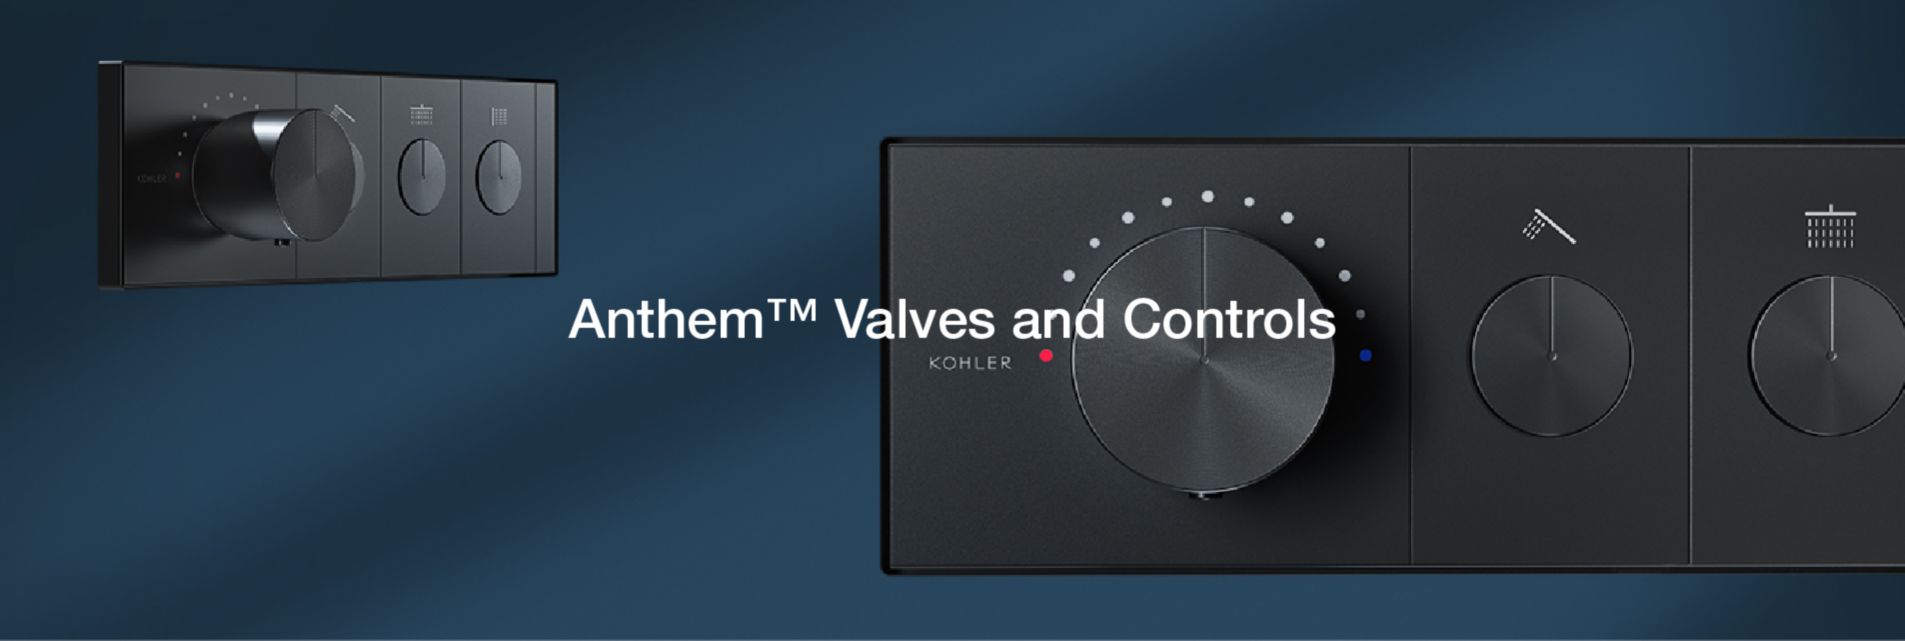 Anthem™ Valves and Controls